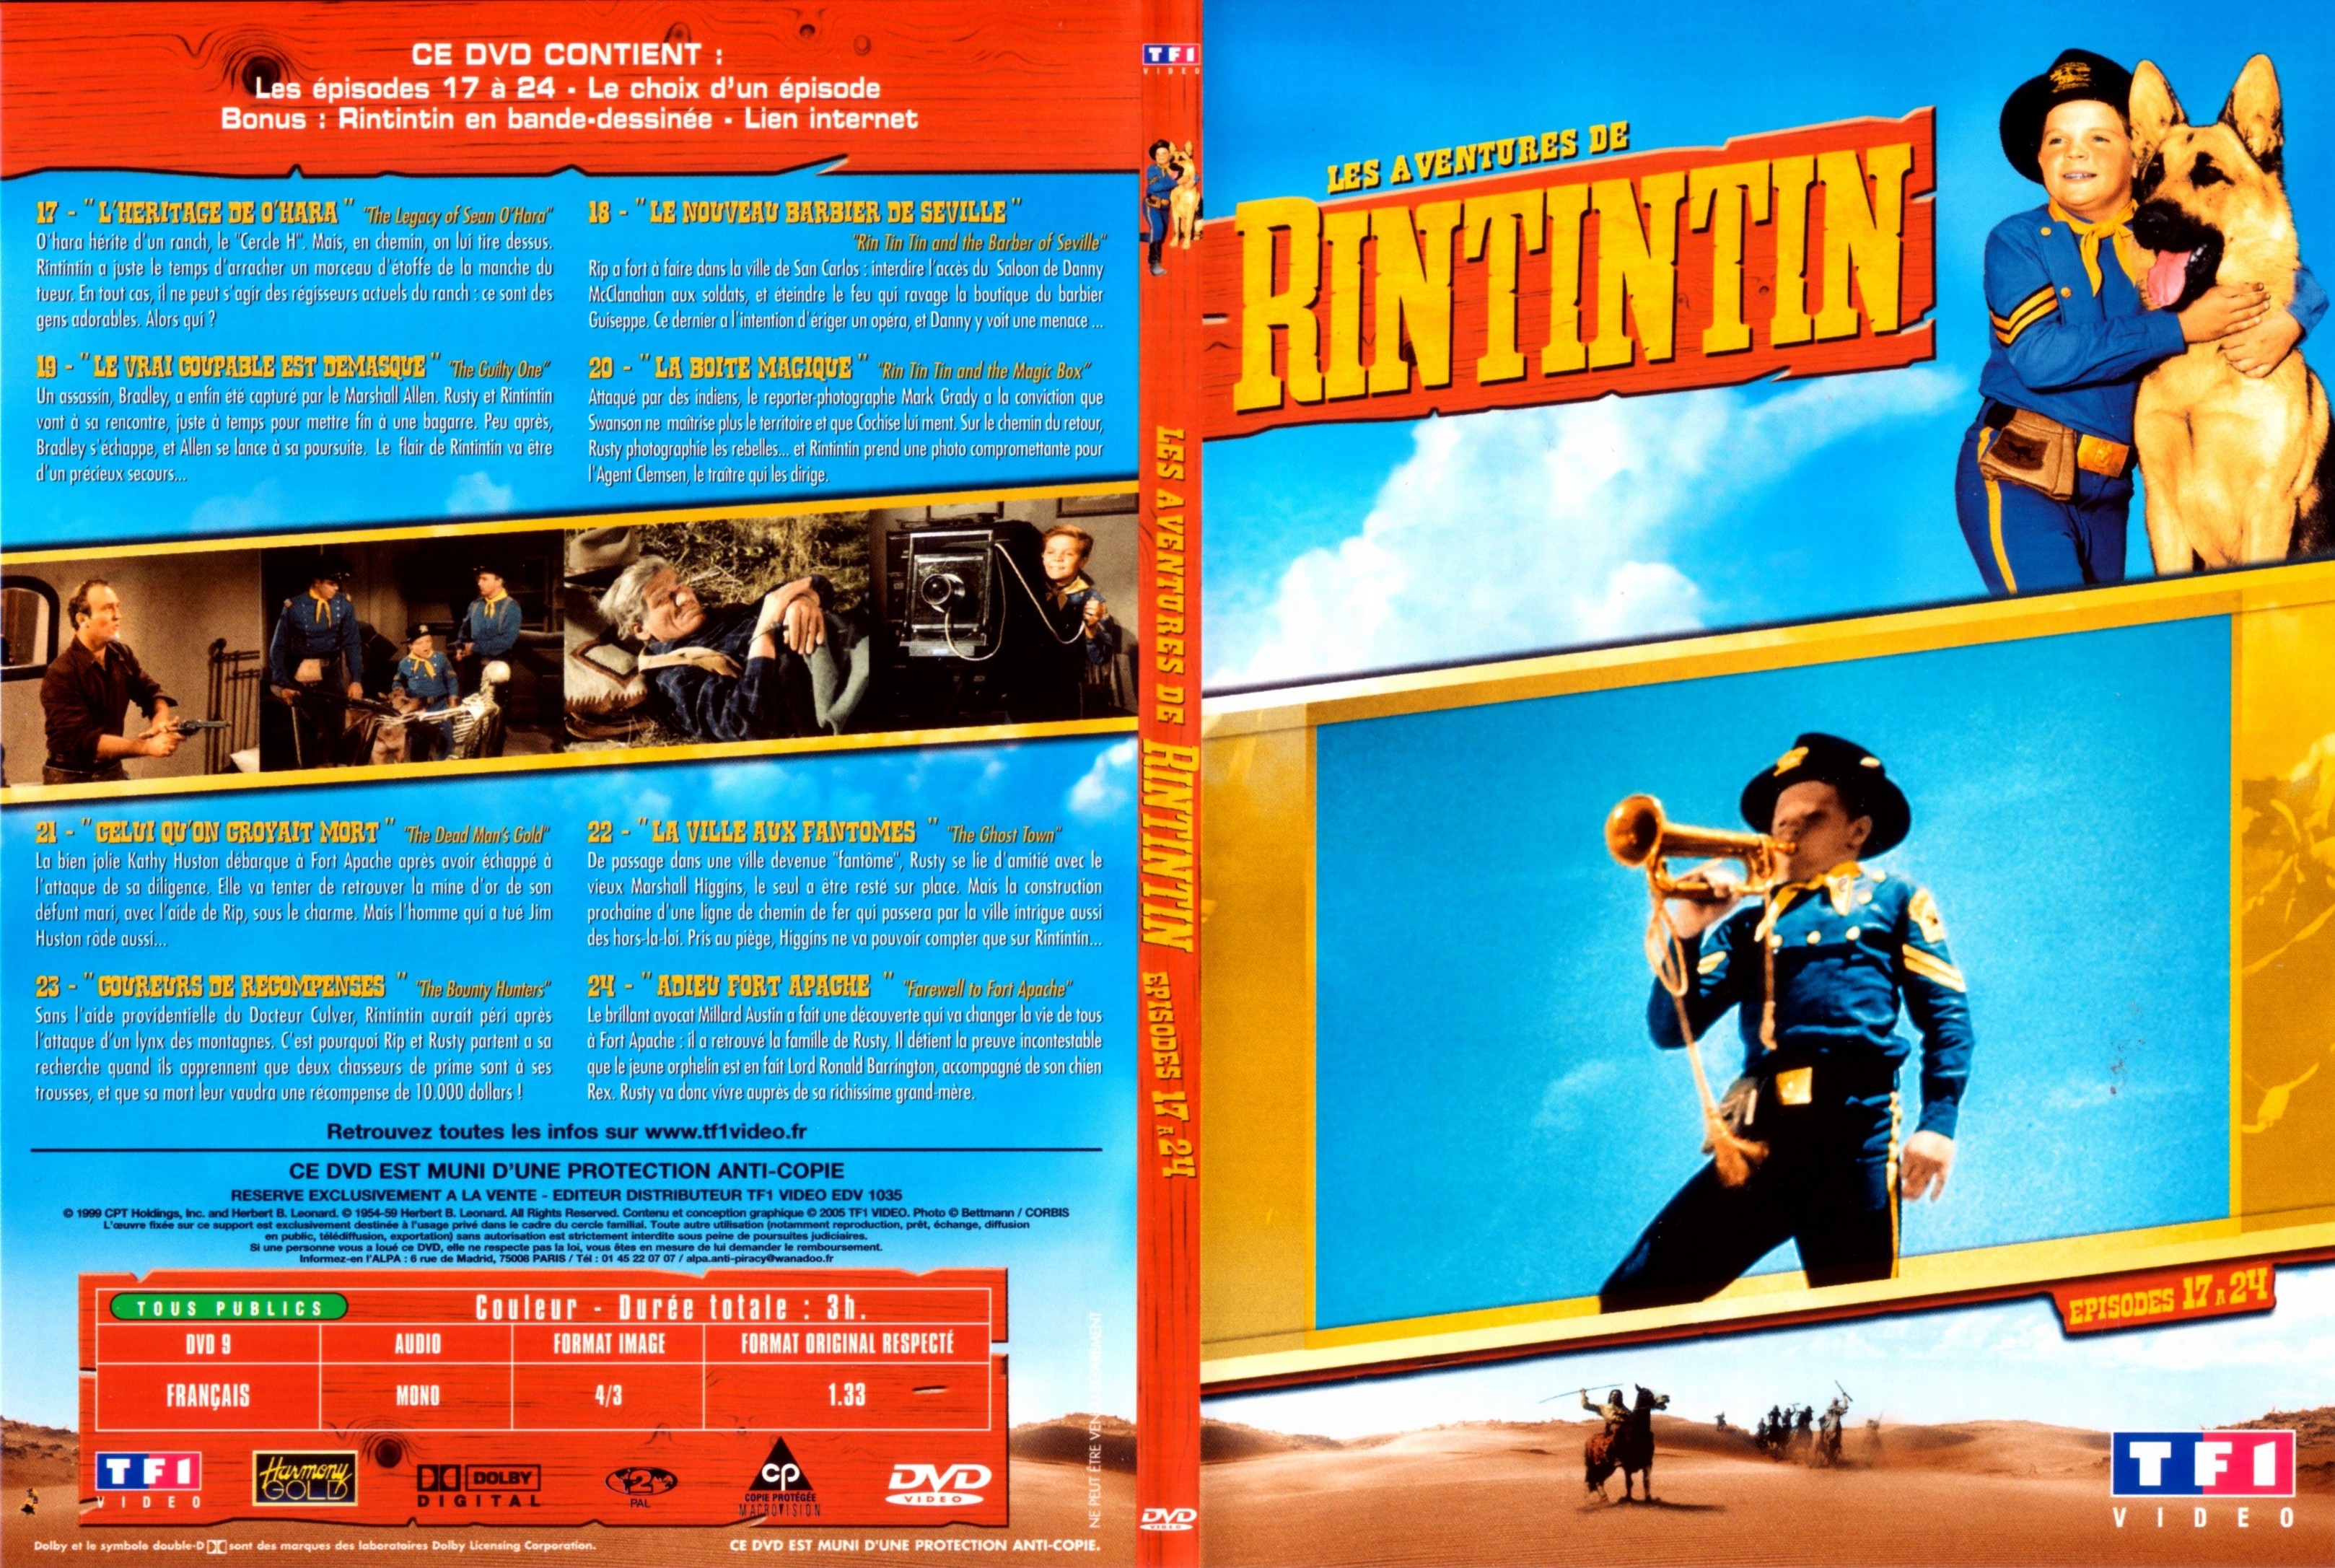 Jaquette DVD Les aventures de Rintintin vol 1 DVD 3